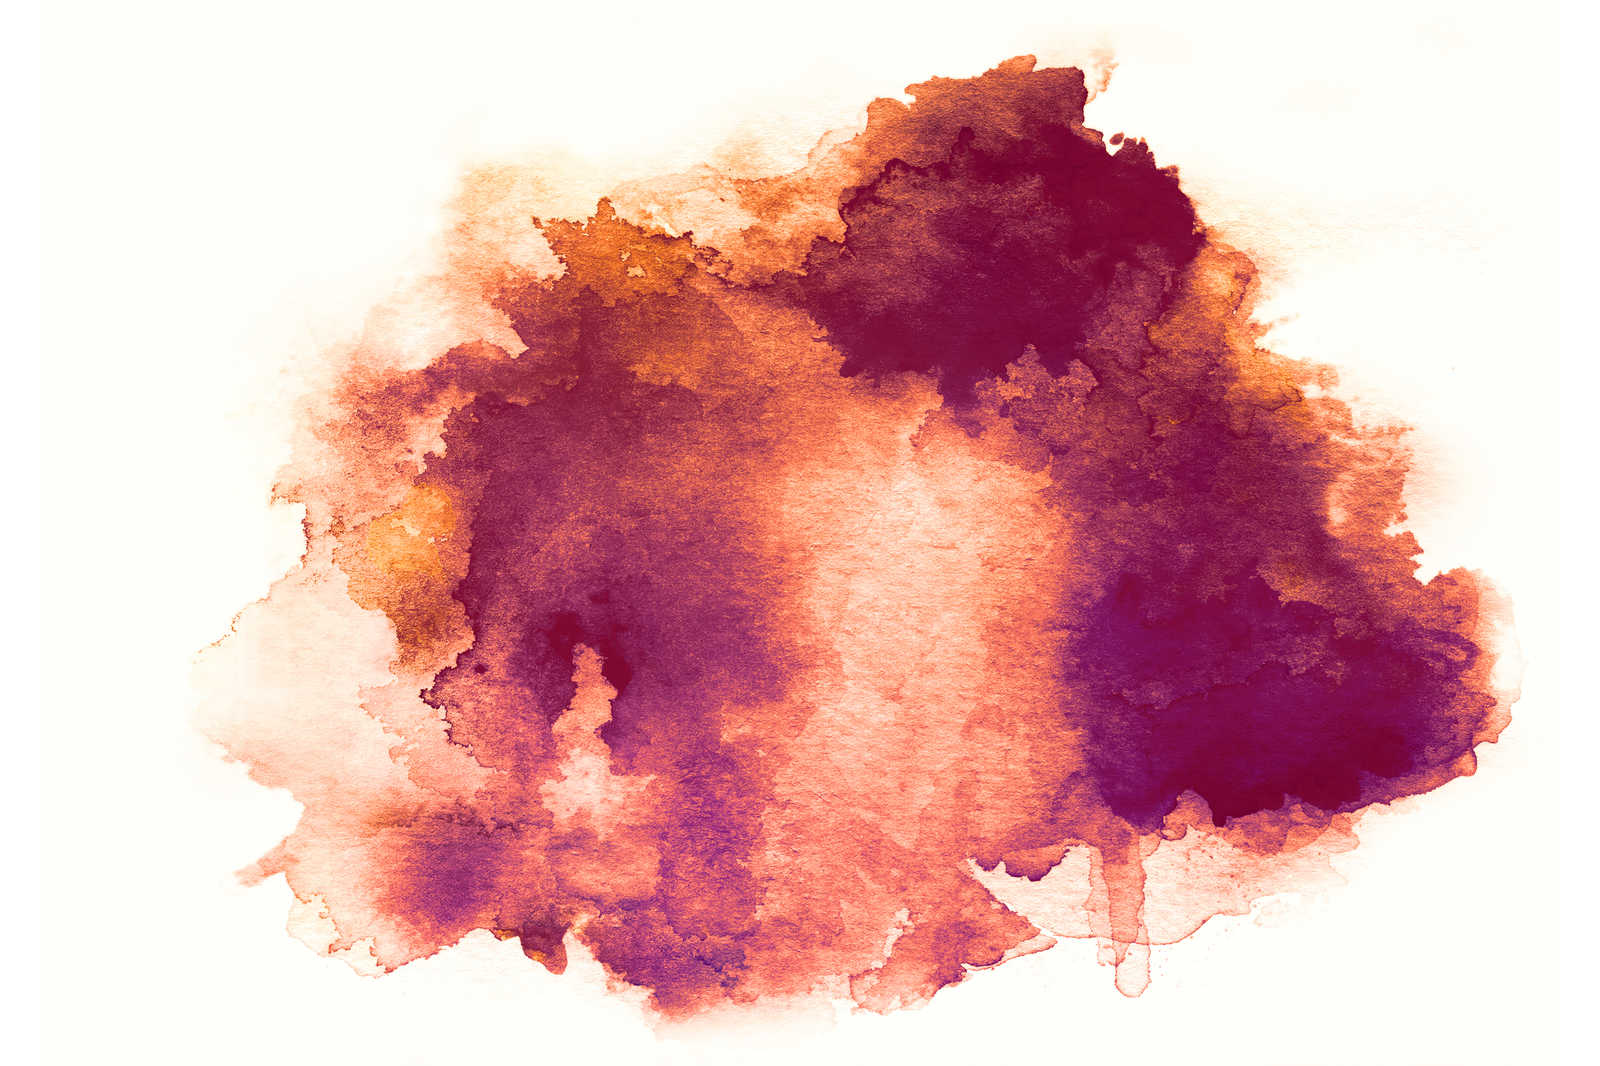             Leinwandbild Aquarell Fleck Rot mit Farbverlauf – 1,20 m x 0,80 m
        